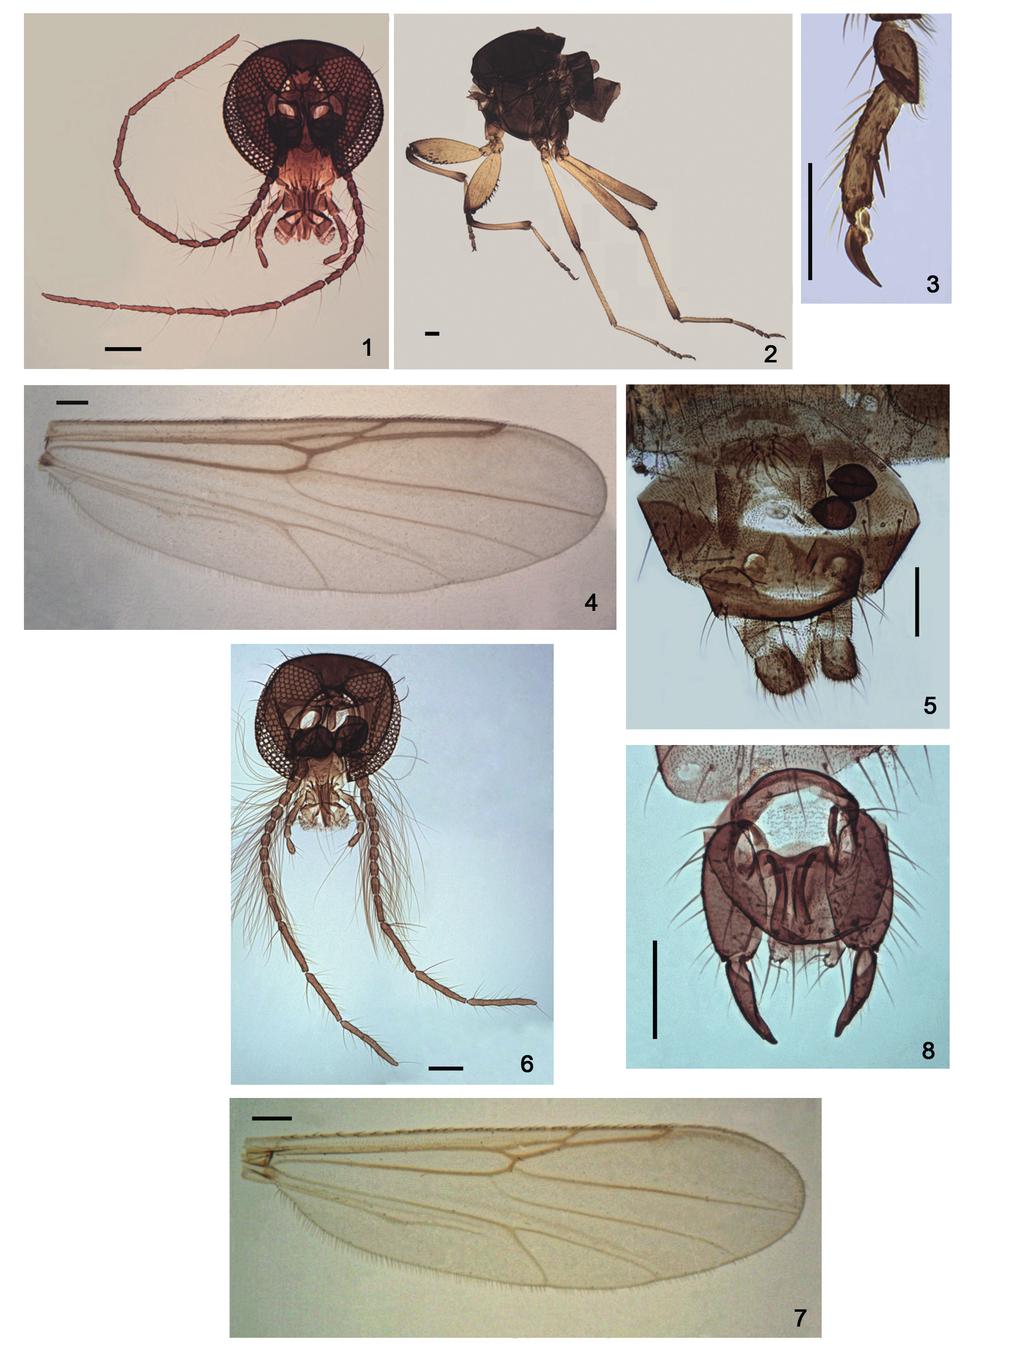 96 Spinelli et al. Figs 1-8. Austrosphaeromias chilensis (Ingram & Macfie, 1931). 1-5, female, 6-8, male.